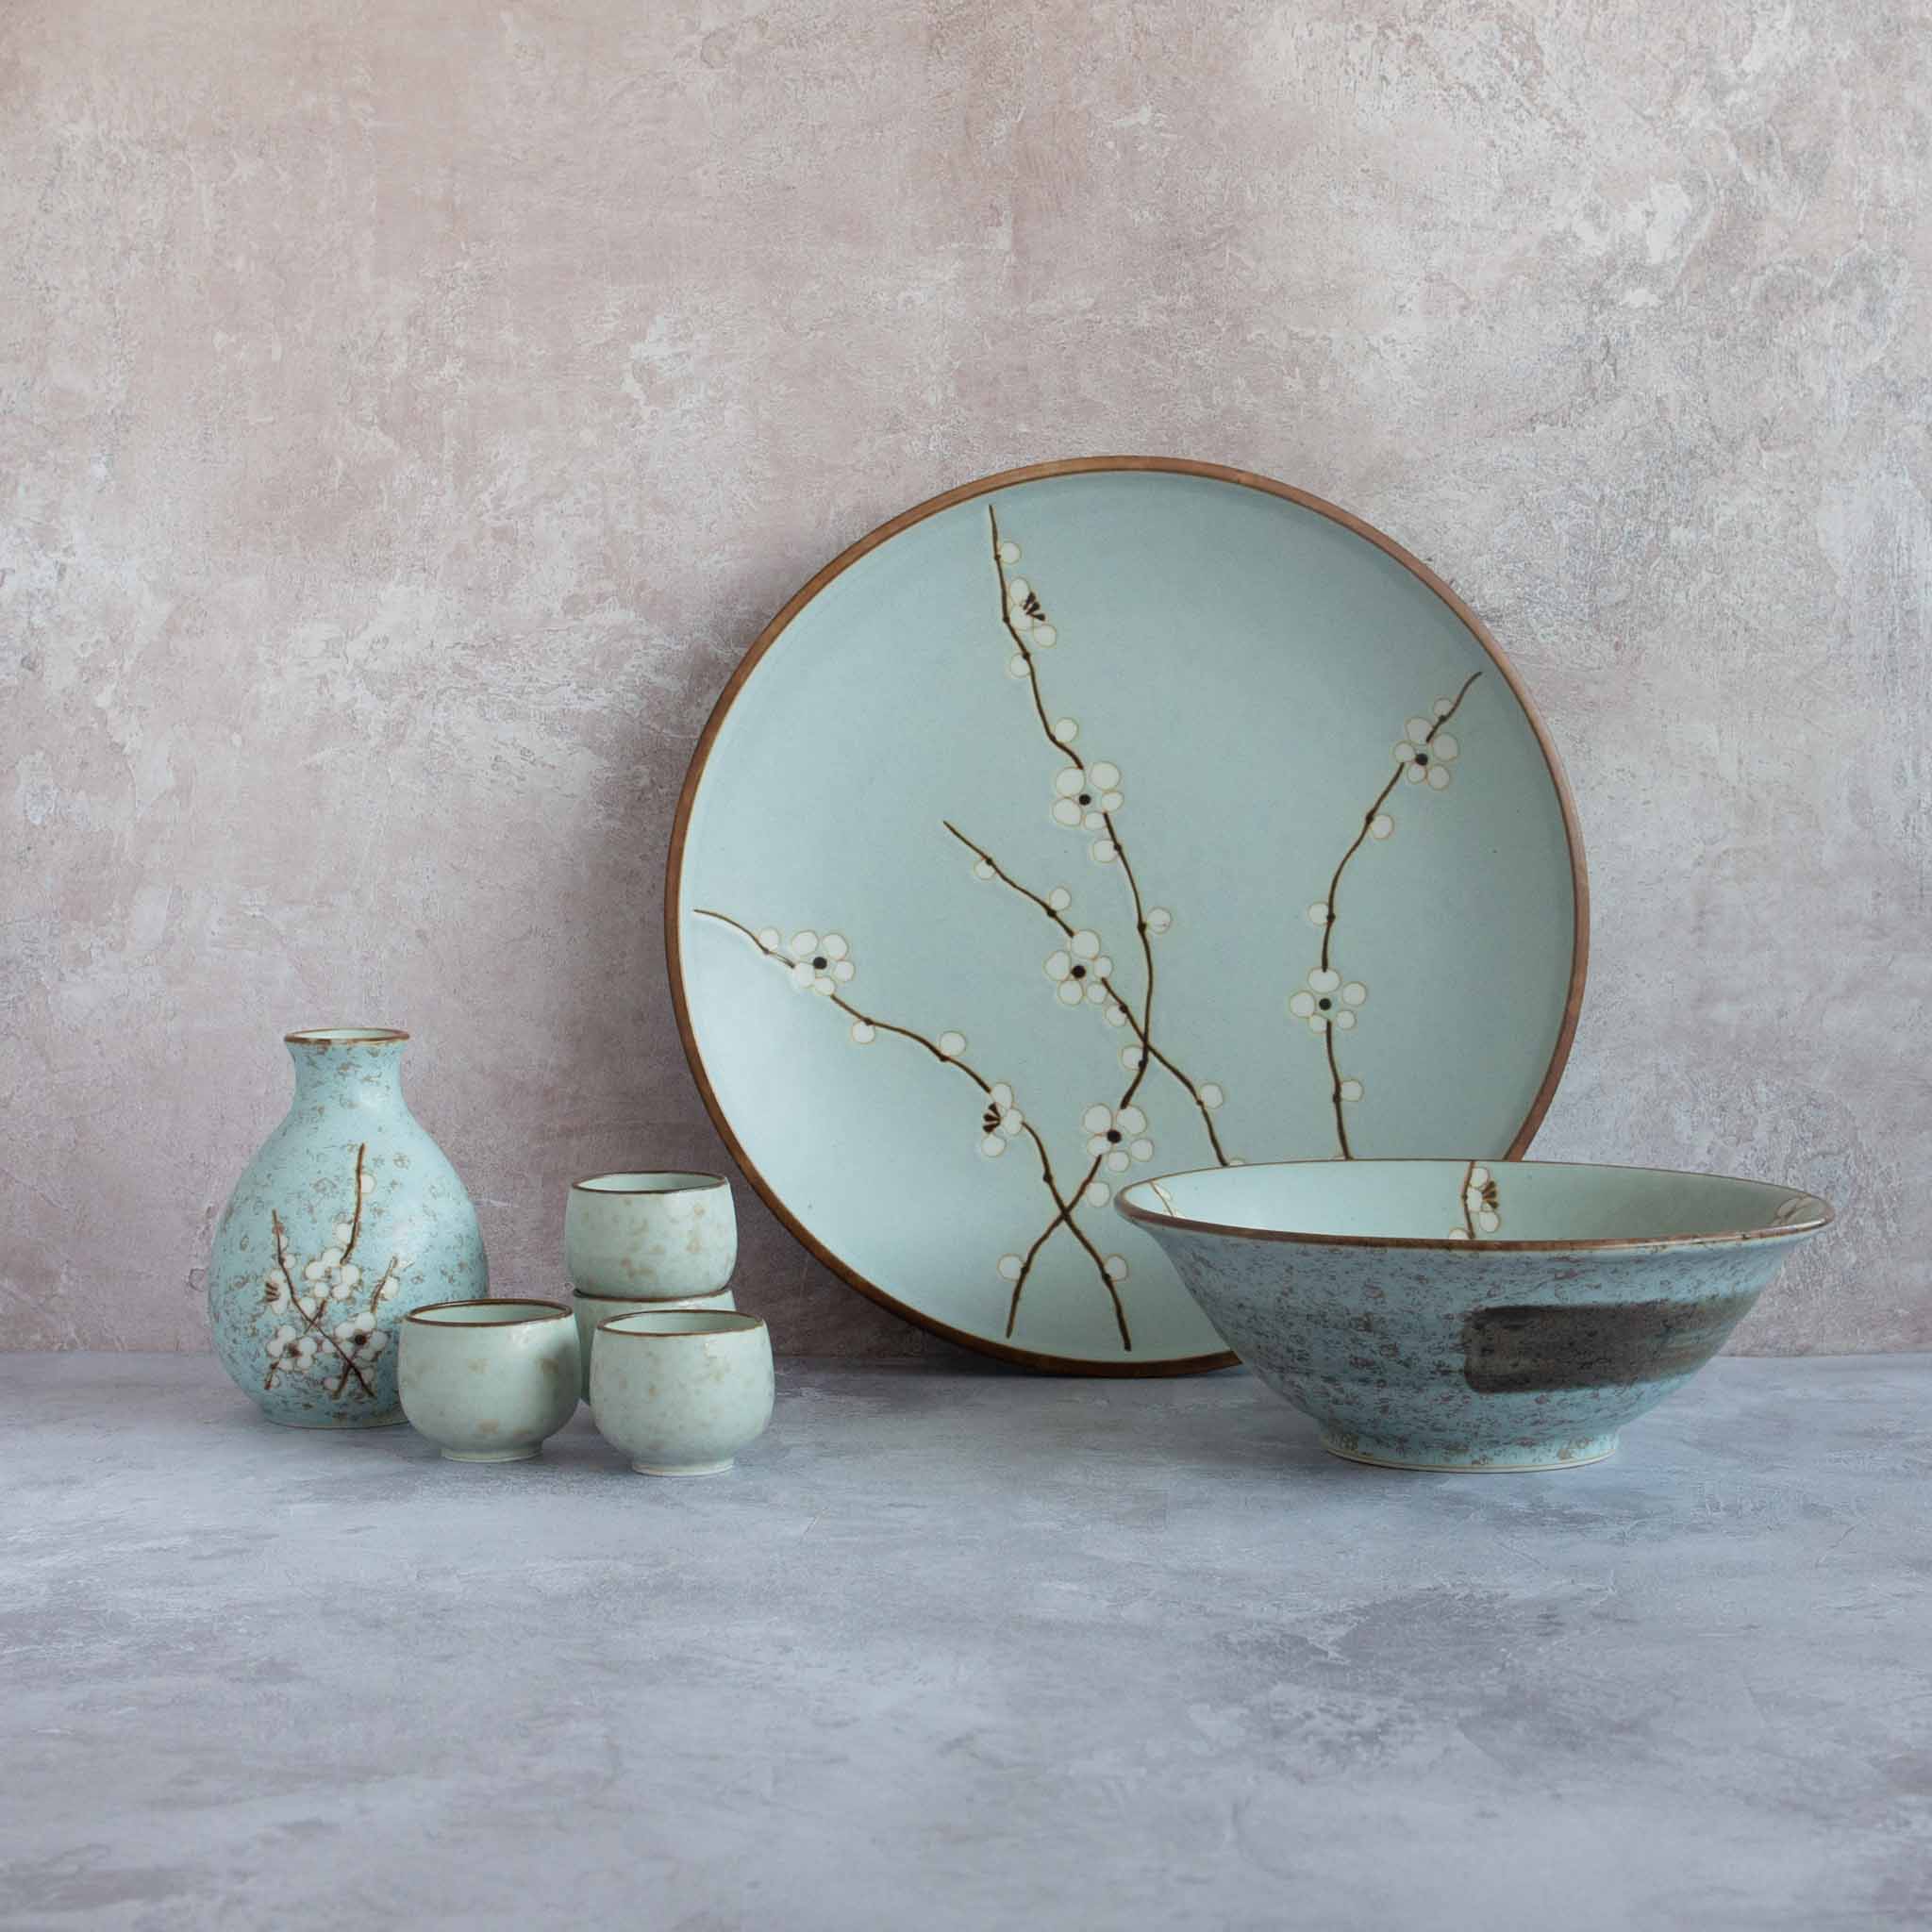 Kiji Stoneware & Ceramics Sakura Rice Bowl Tableware Japanese Tableware